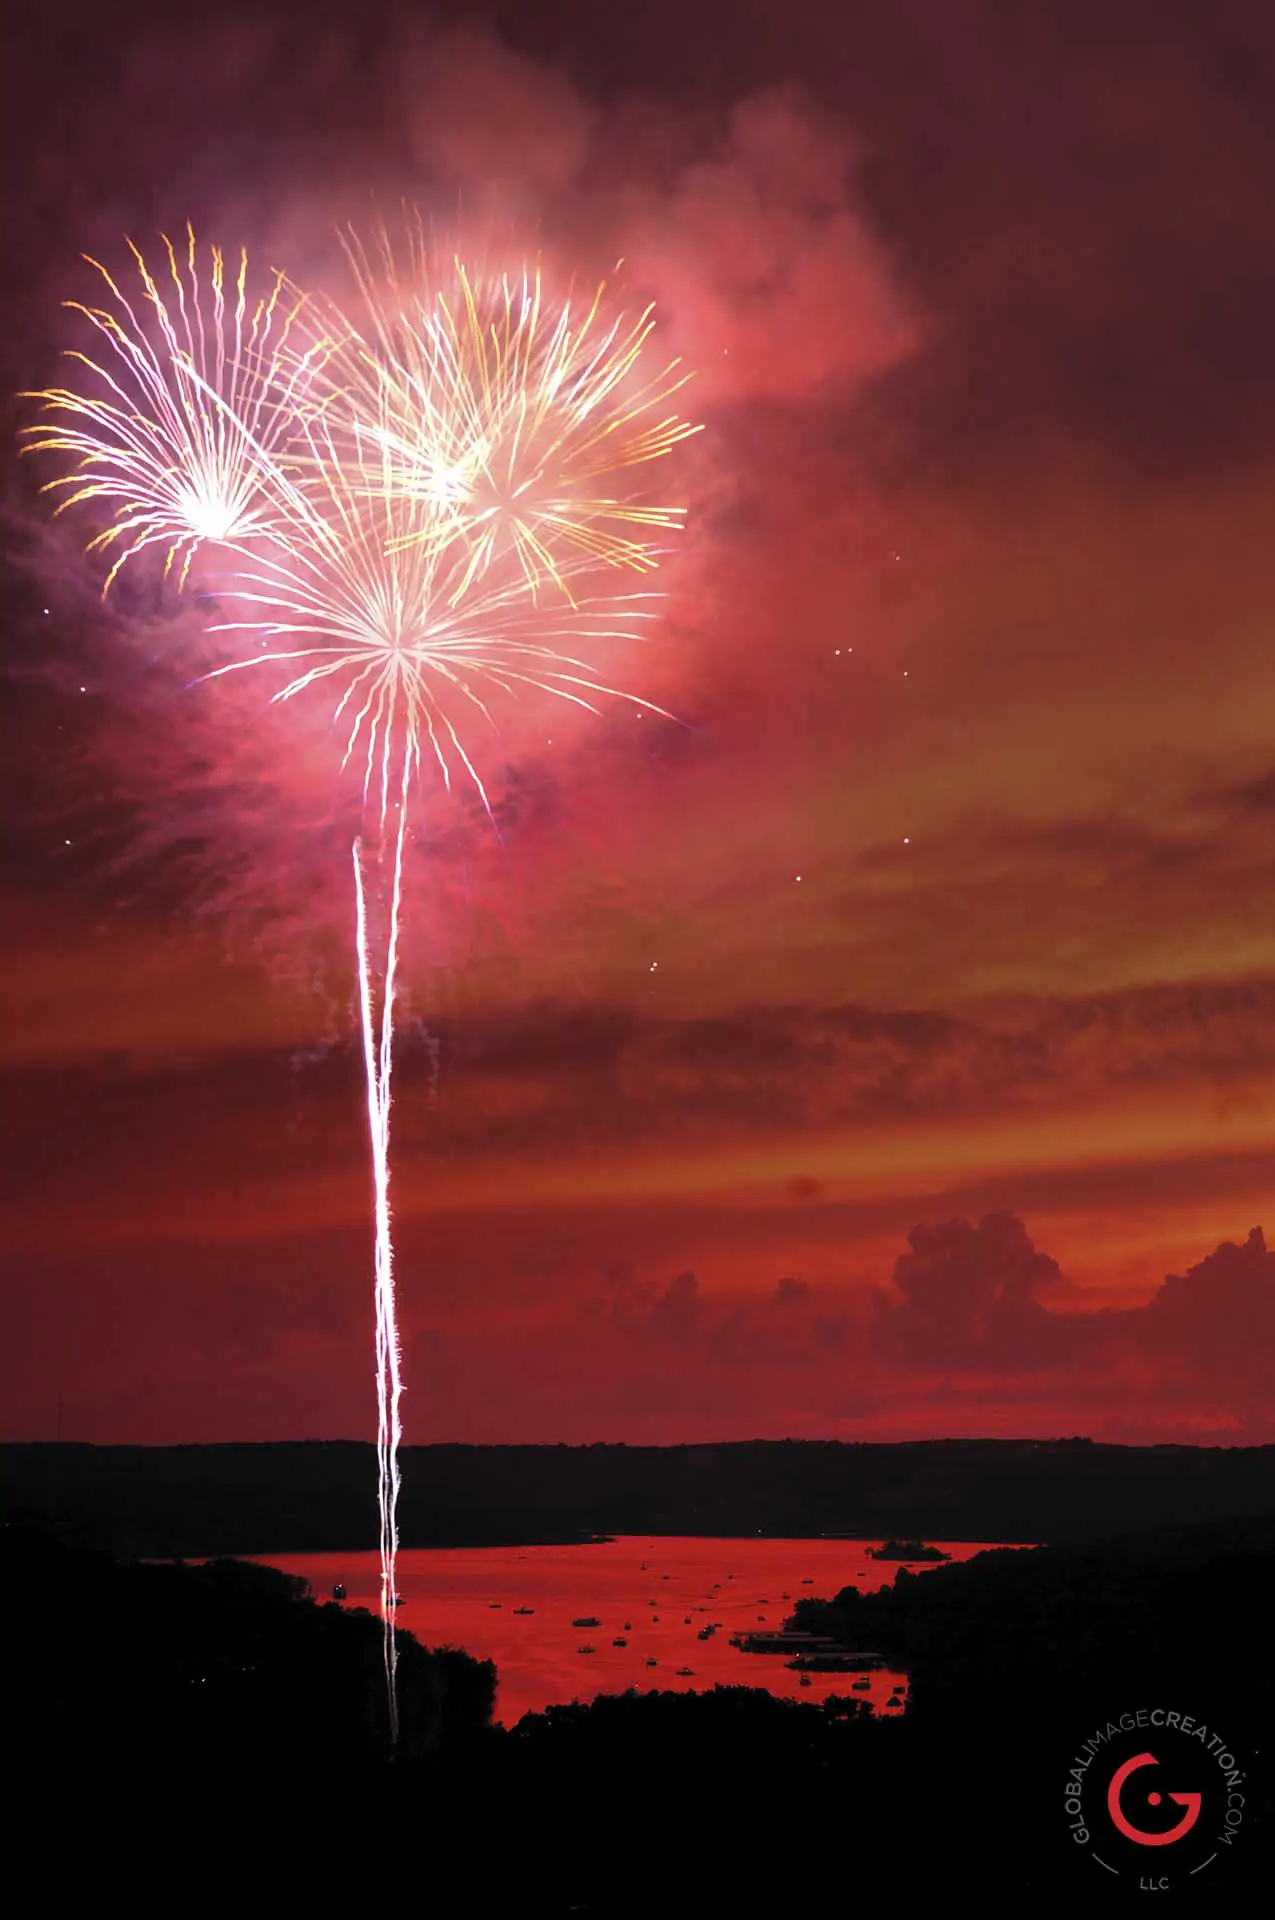 Fireworks on table rock lake - Advertising photographers in Branson Missouri, Branson Missouri photography